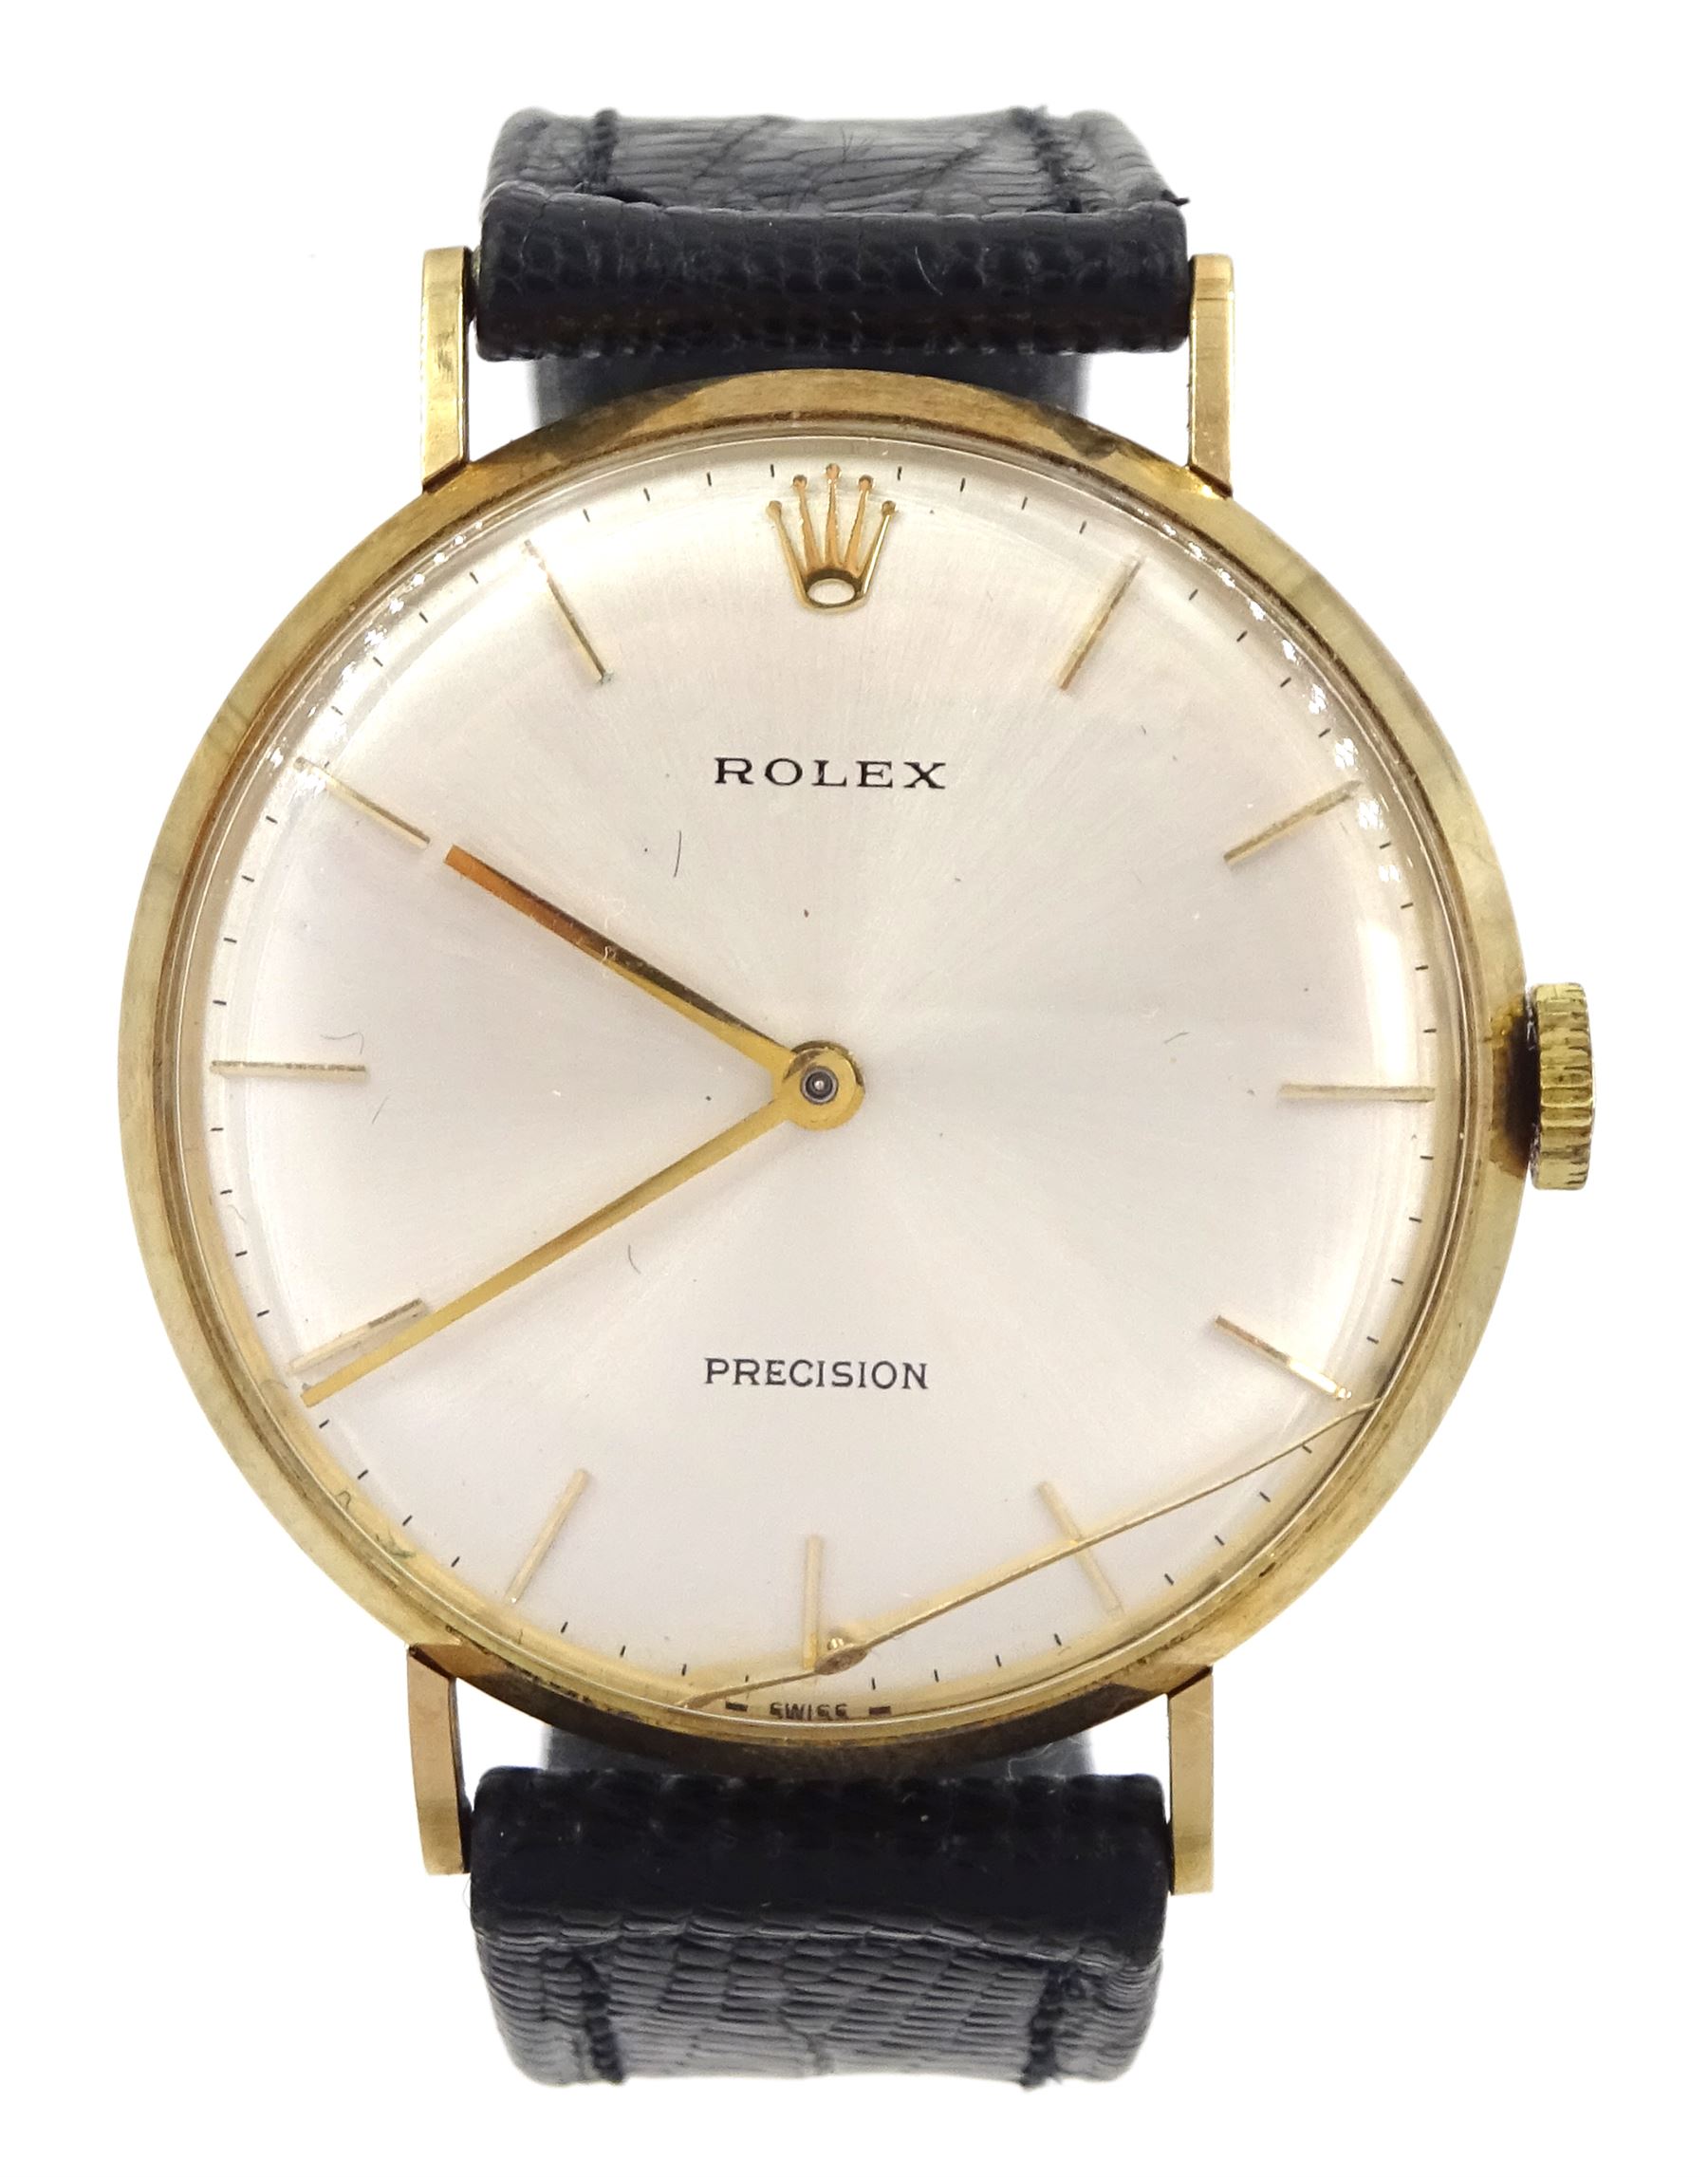 Rolex Precision gentleman's 9ct gold manual wind presentation wristwatch